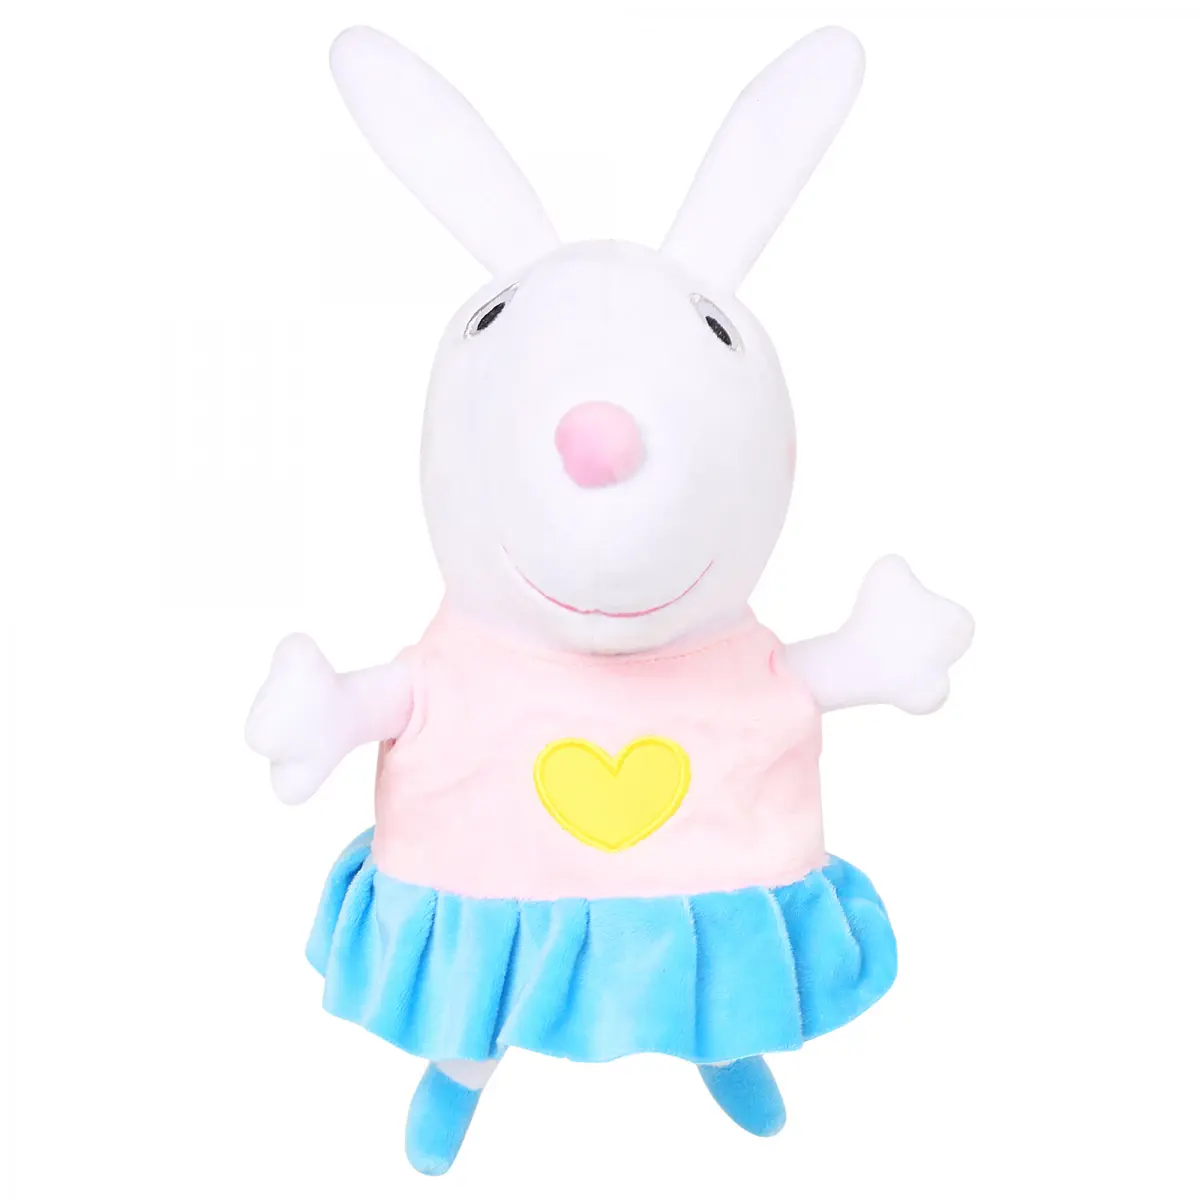 Peppa Pig Rebecca Rabbit Soft Toy for Kids, 30cm, 18M+, Multicolour